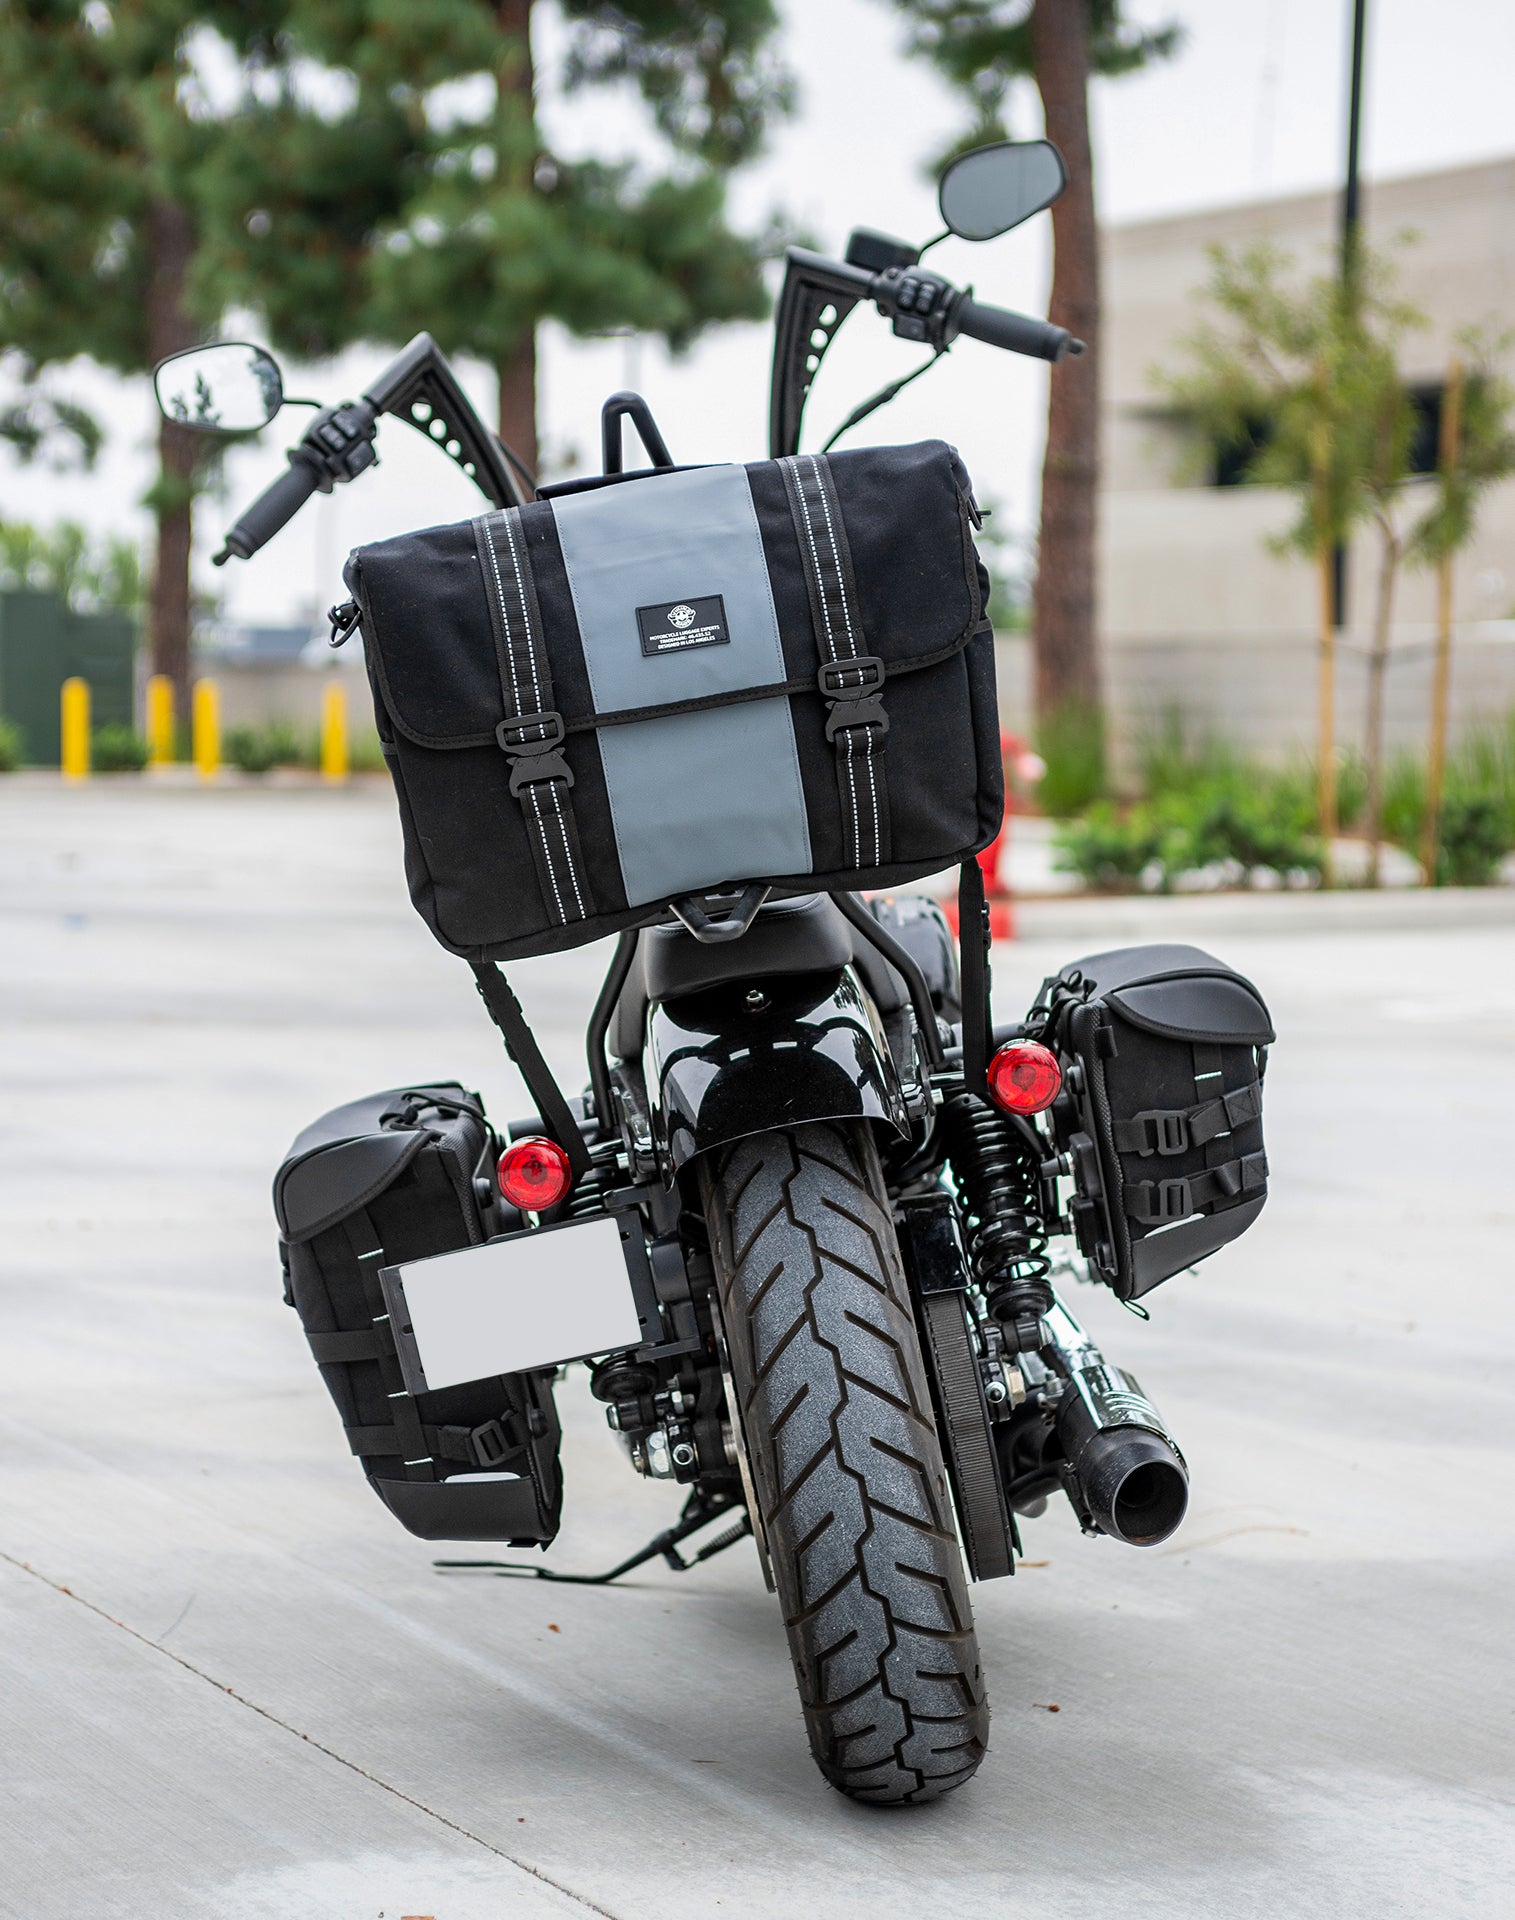 23L - Duo-tone Medium Triumph Motorcycle Messenger Bag Gray/Black